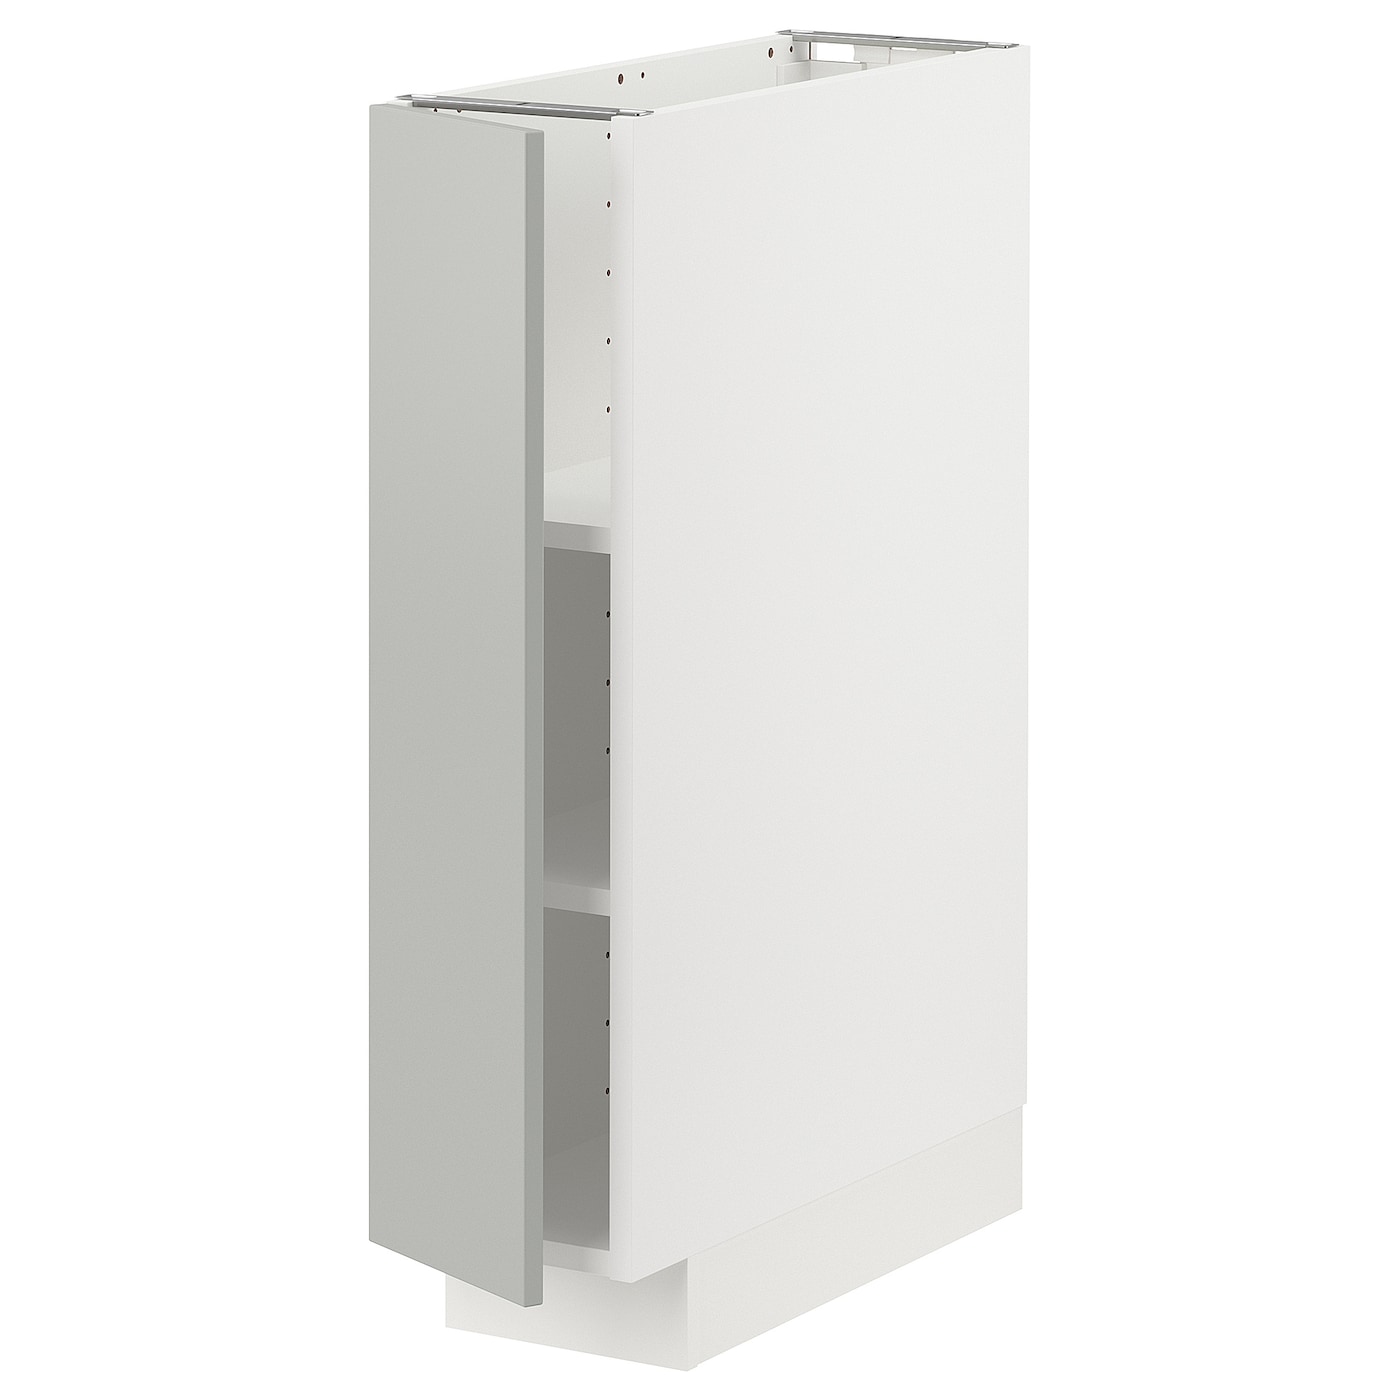 Напольный шкаф - METOD IKEA/ МЕТОД ИКЕА,  88х20 см, белый/серый